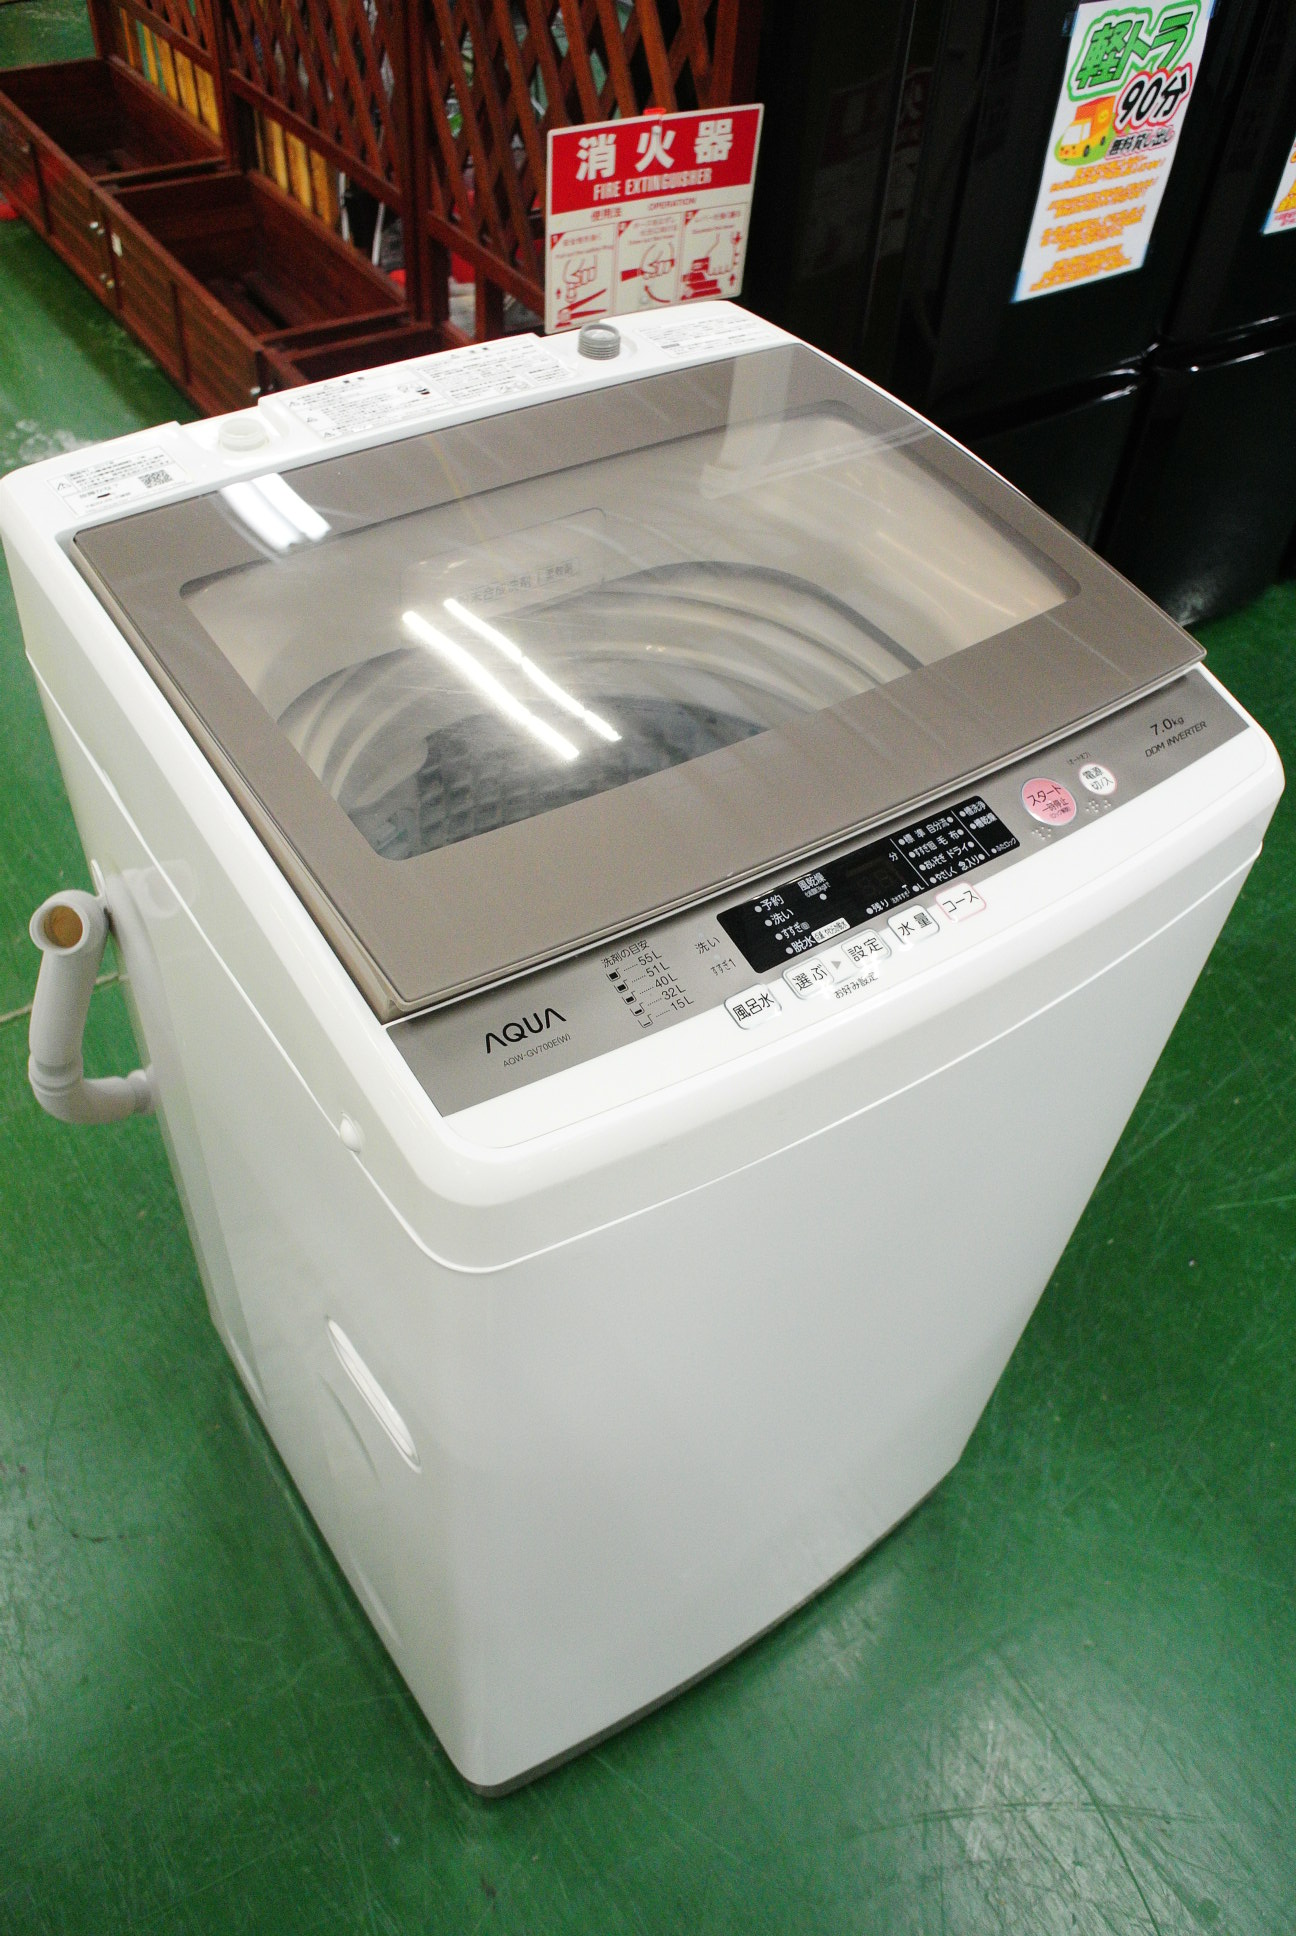 AQUA アクア 7.0kg洗濯機 AQW-GV700E 2017年製が入荷！ファミリー向け 